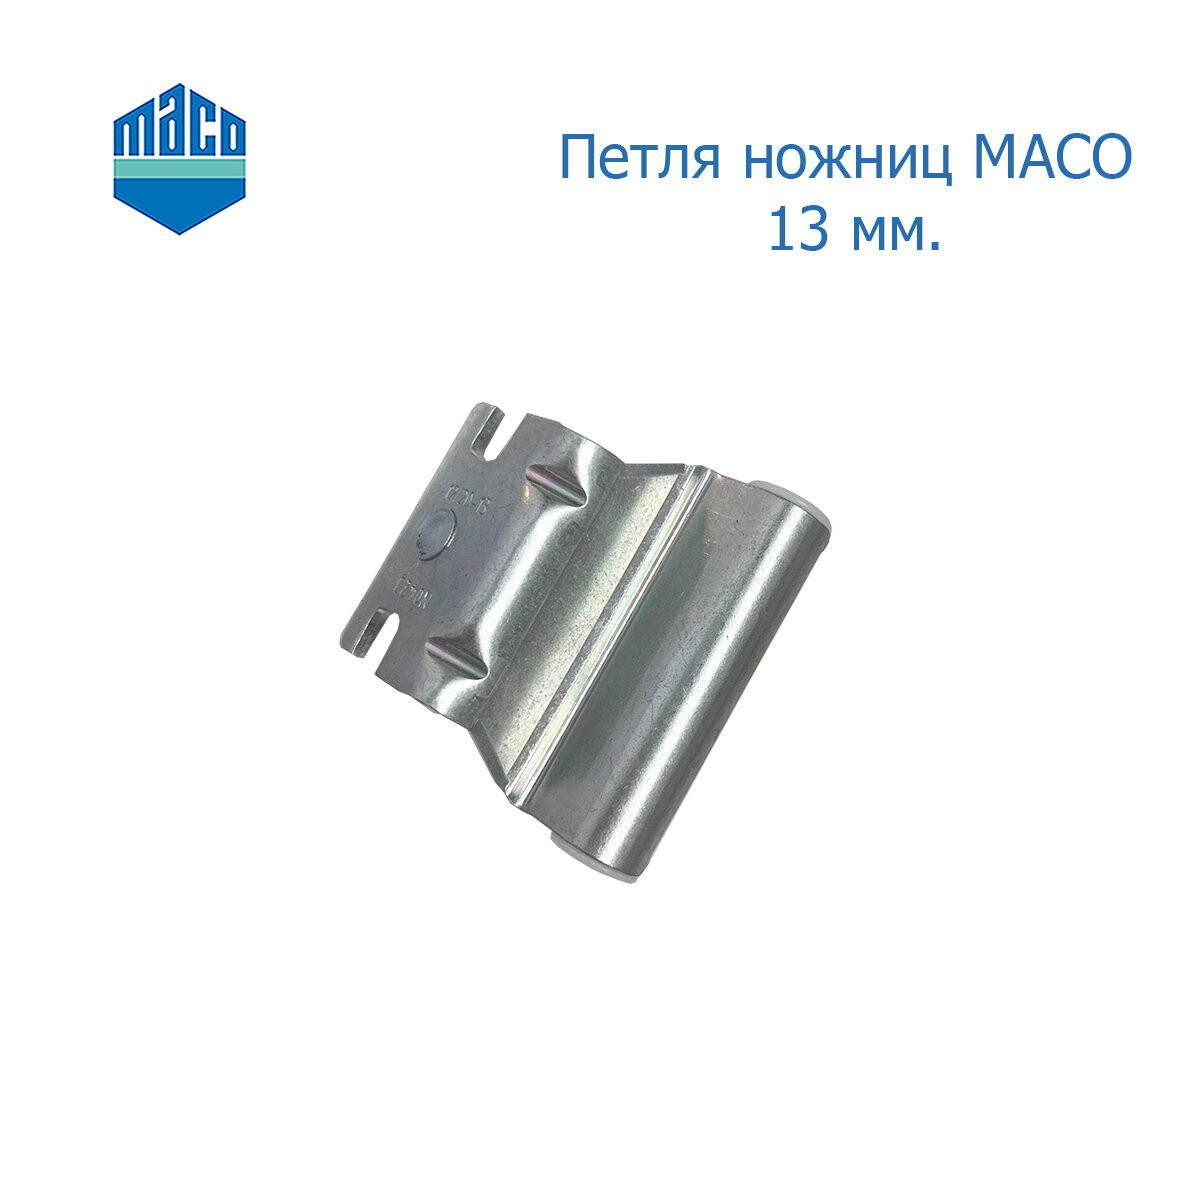 Петля ножниц MACO 13 мм